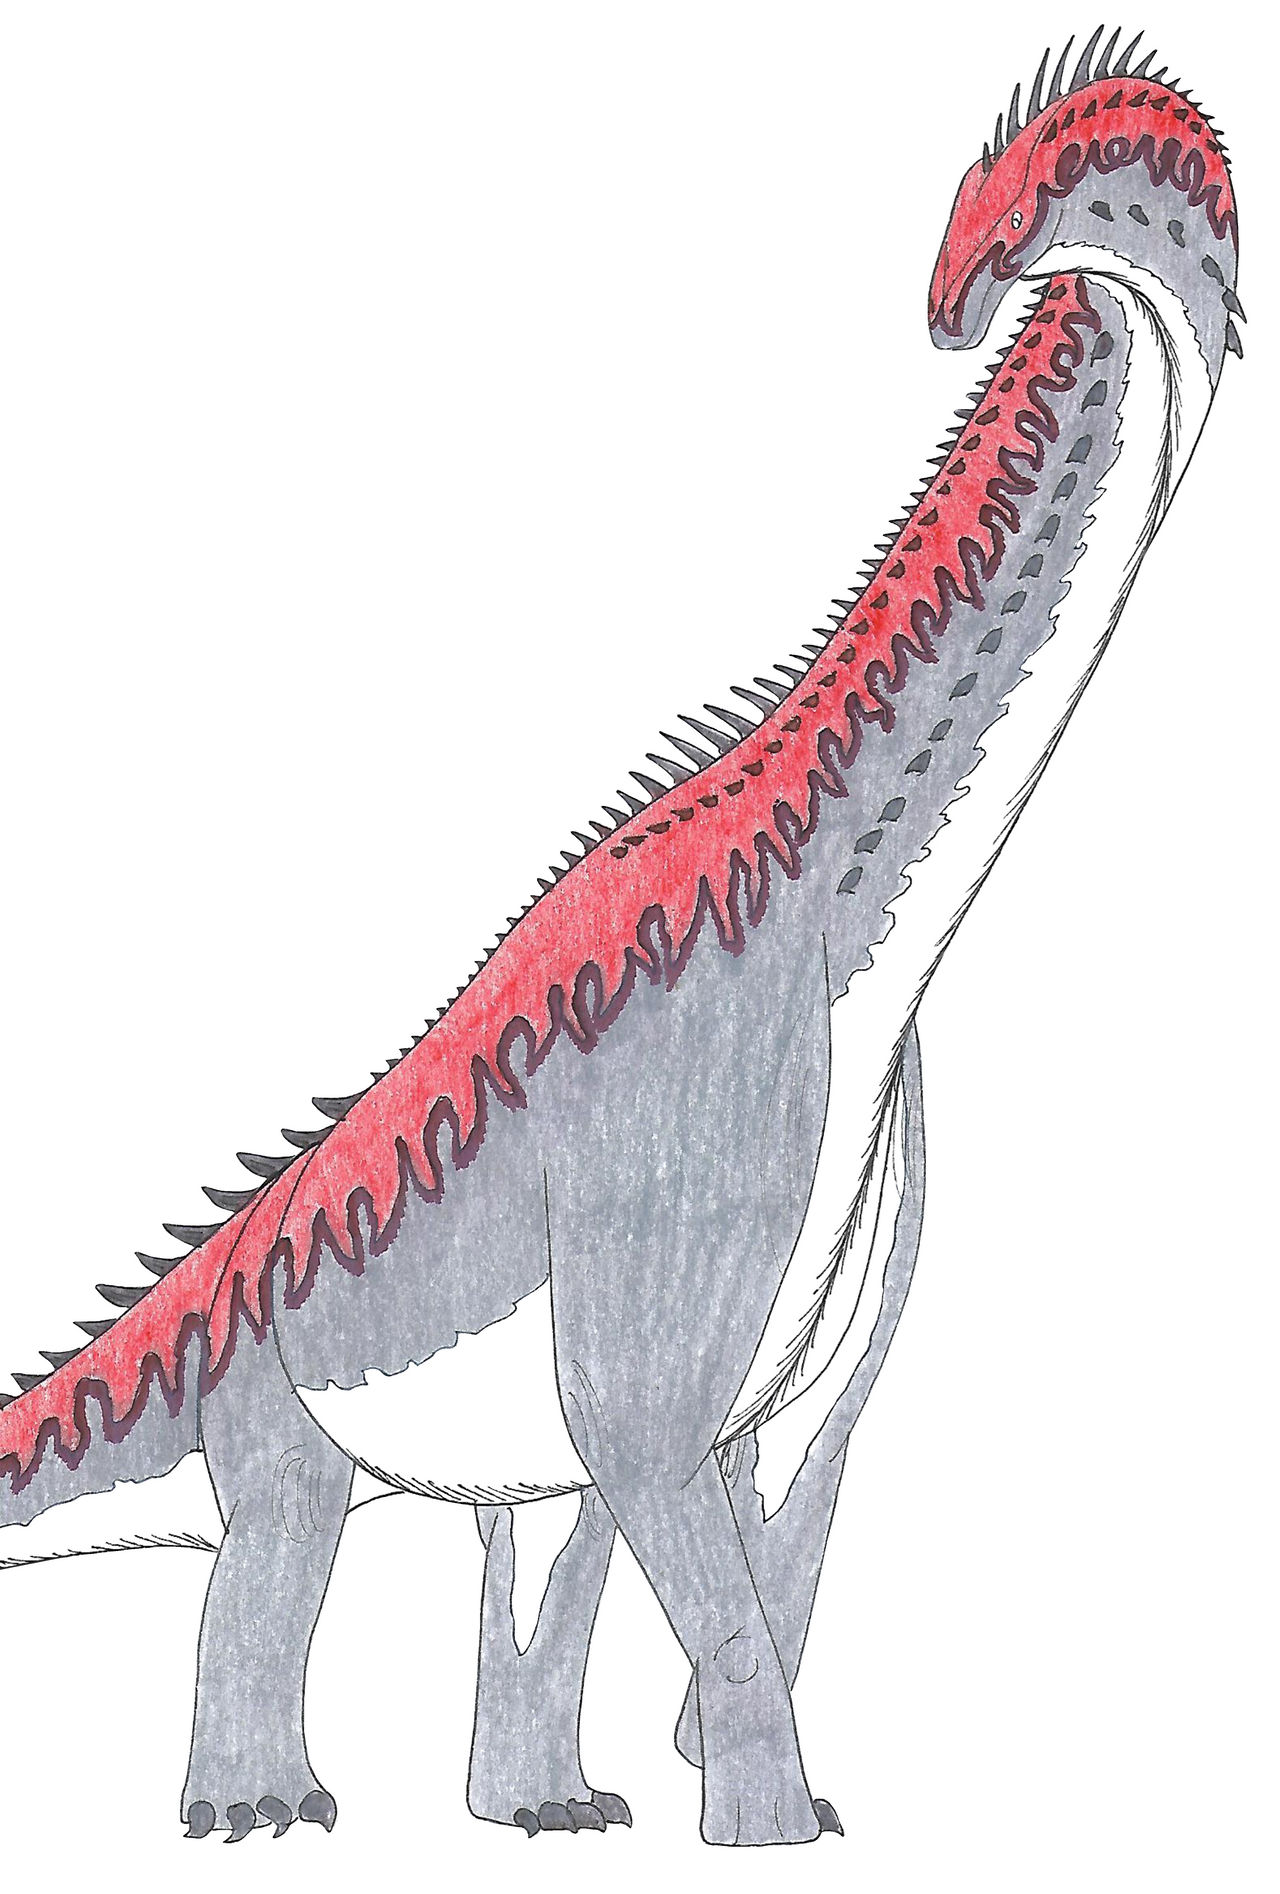 Deinocheirus mirificus by IllustratedMenagerie on DeviantArt